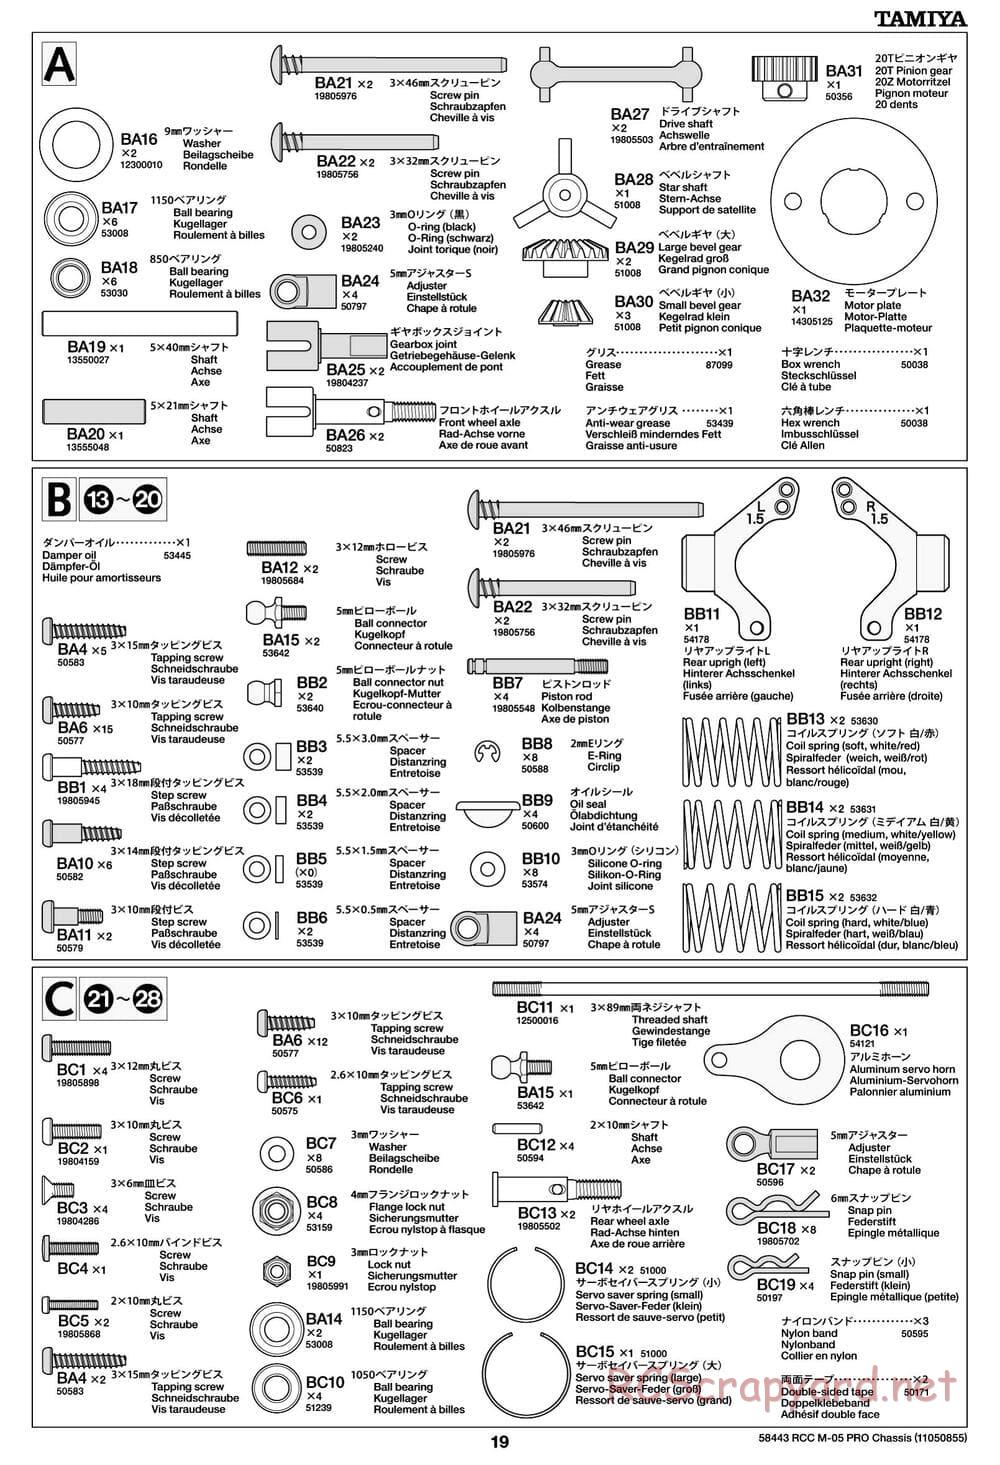 Tamiya - M05-Pro Chassis - Manual - Page 19